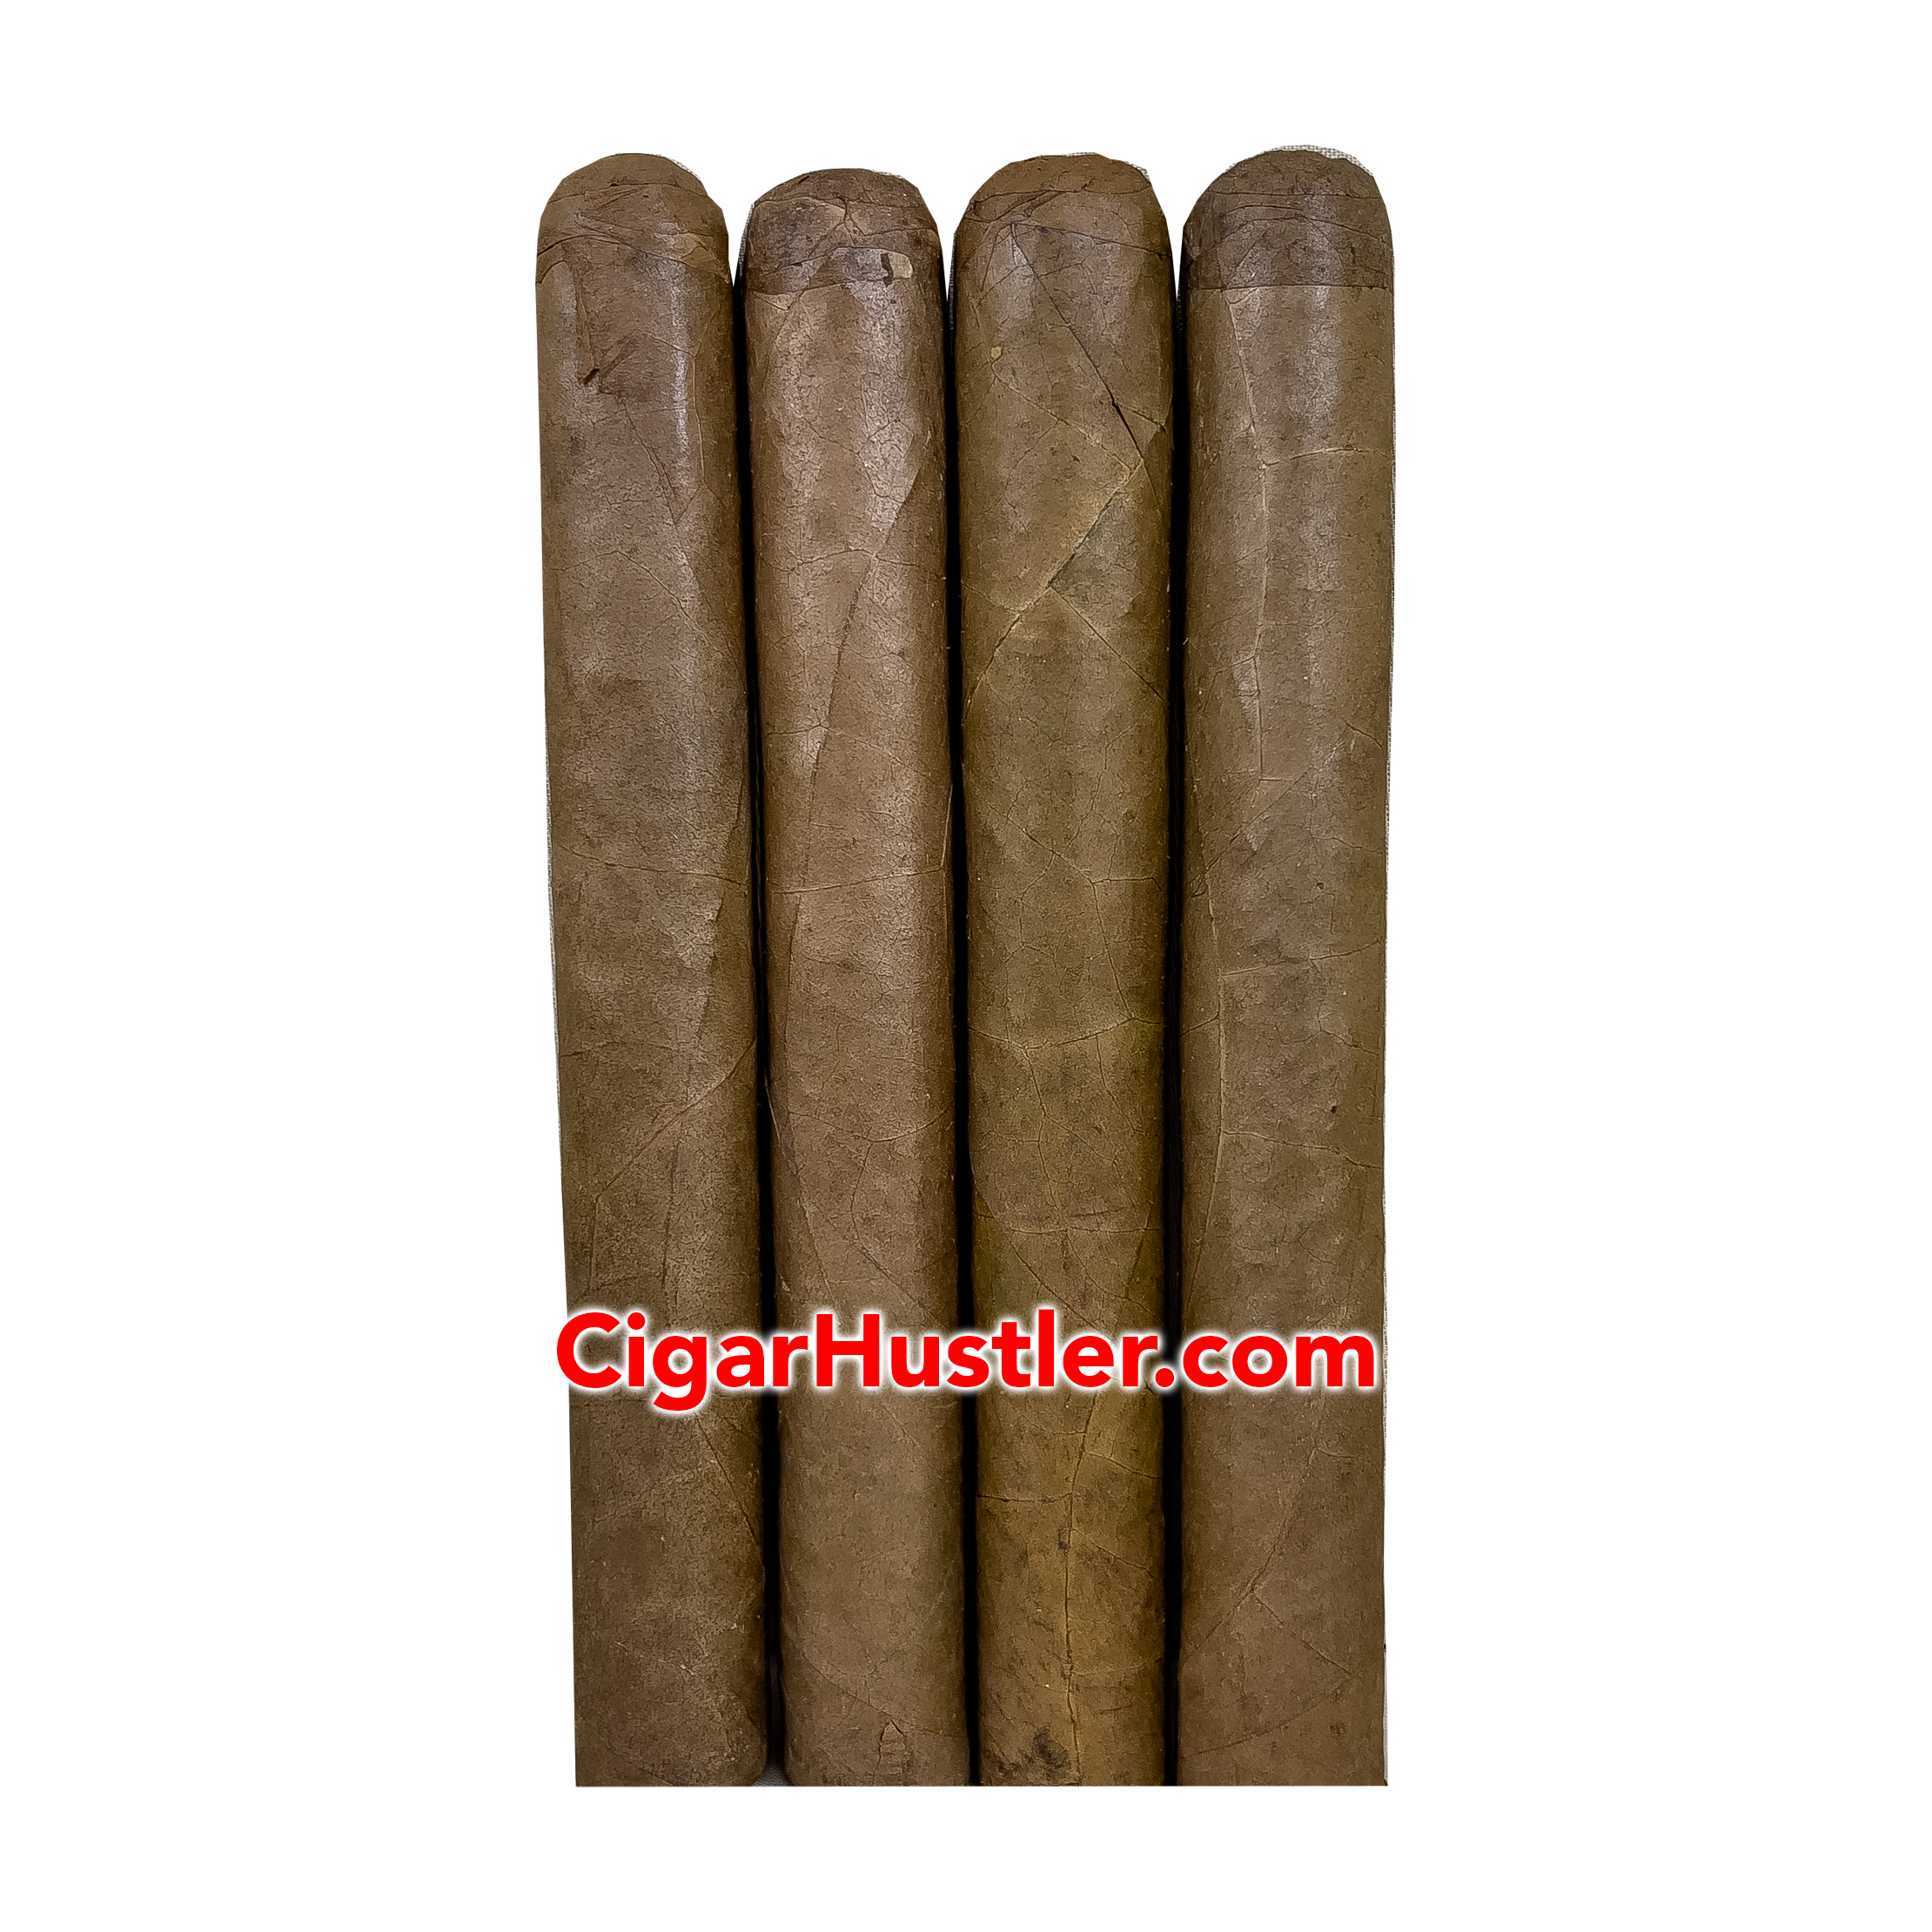 Cigar Hustler Private Blend Connecticut Toro Cigar - 4 Pack